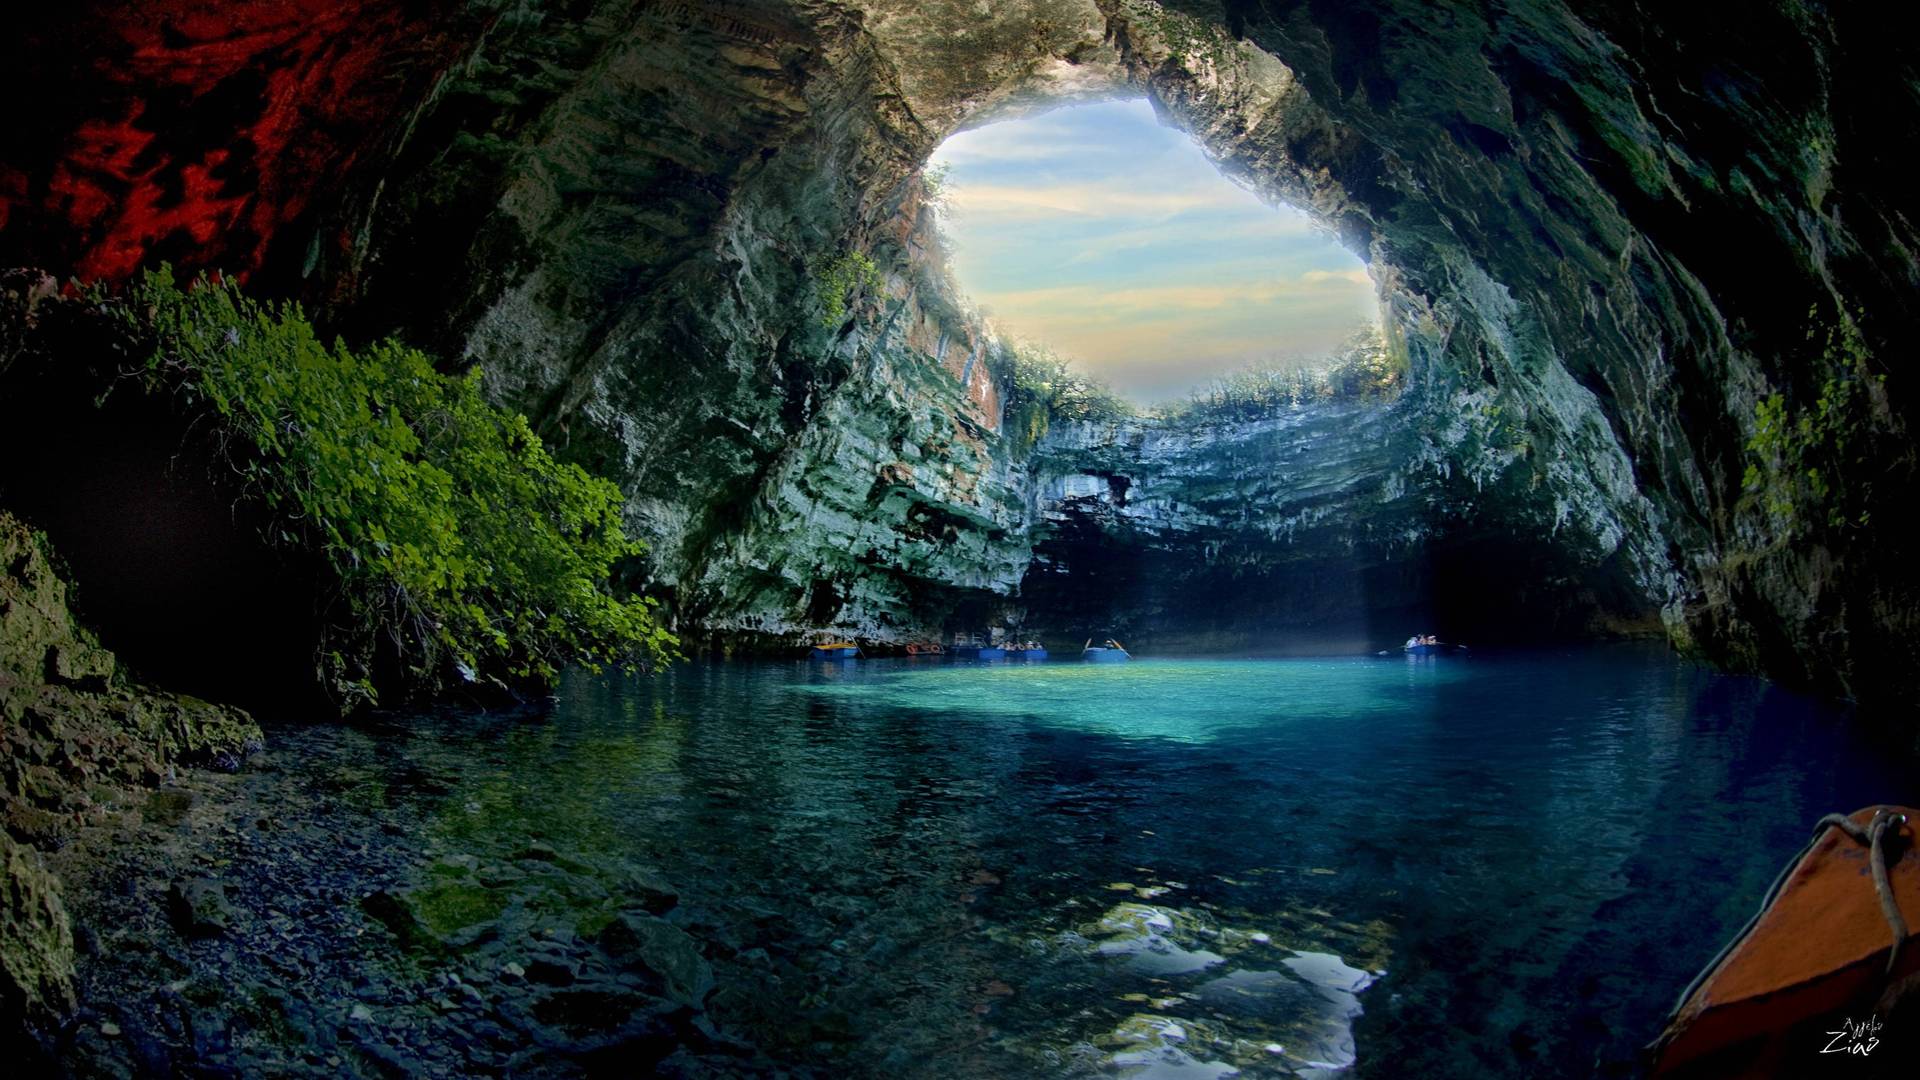 fondos de pantalla full hd 1920x1080 descarga gratuita,naturaleza,paisaje natural,cueva del mar,formación,cueva